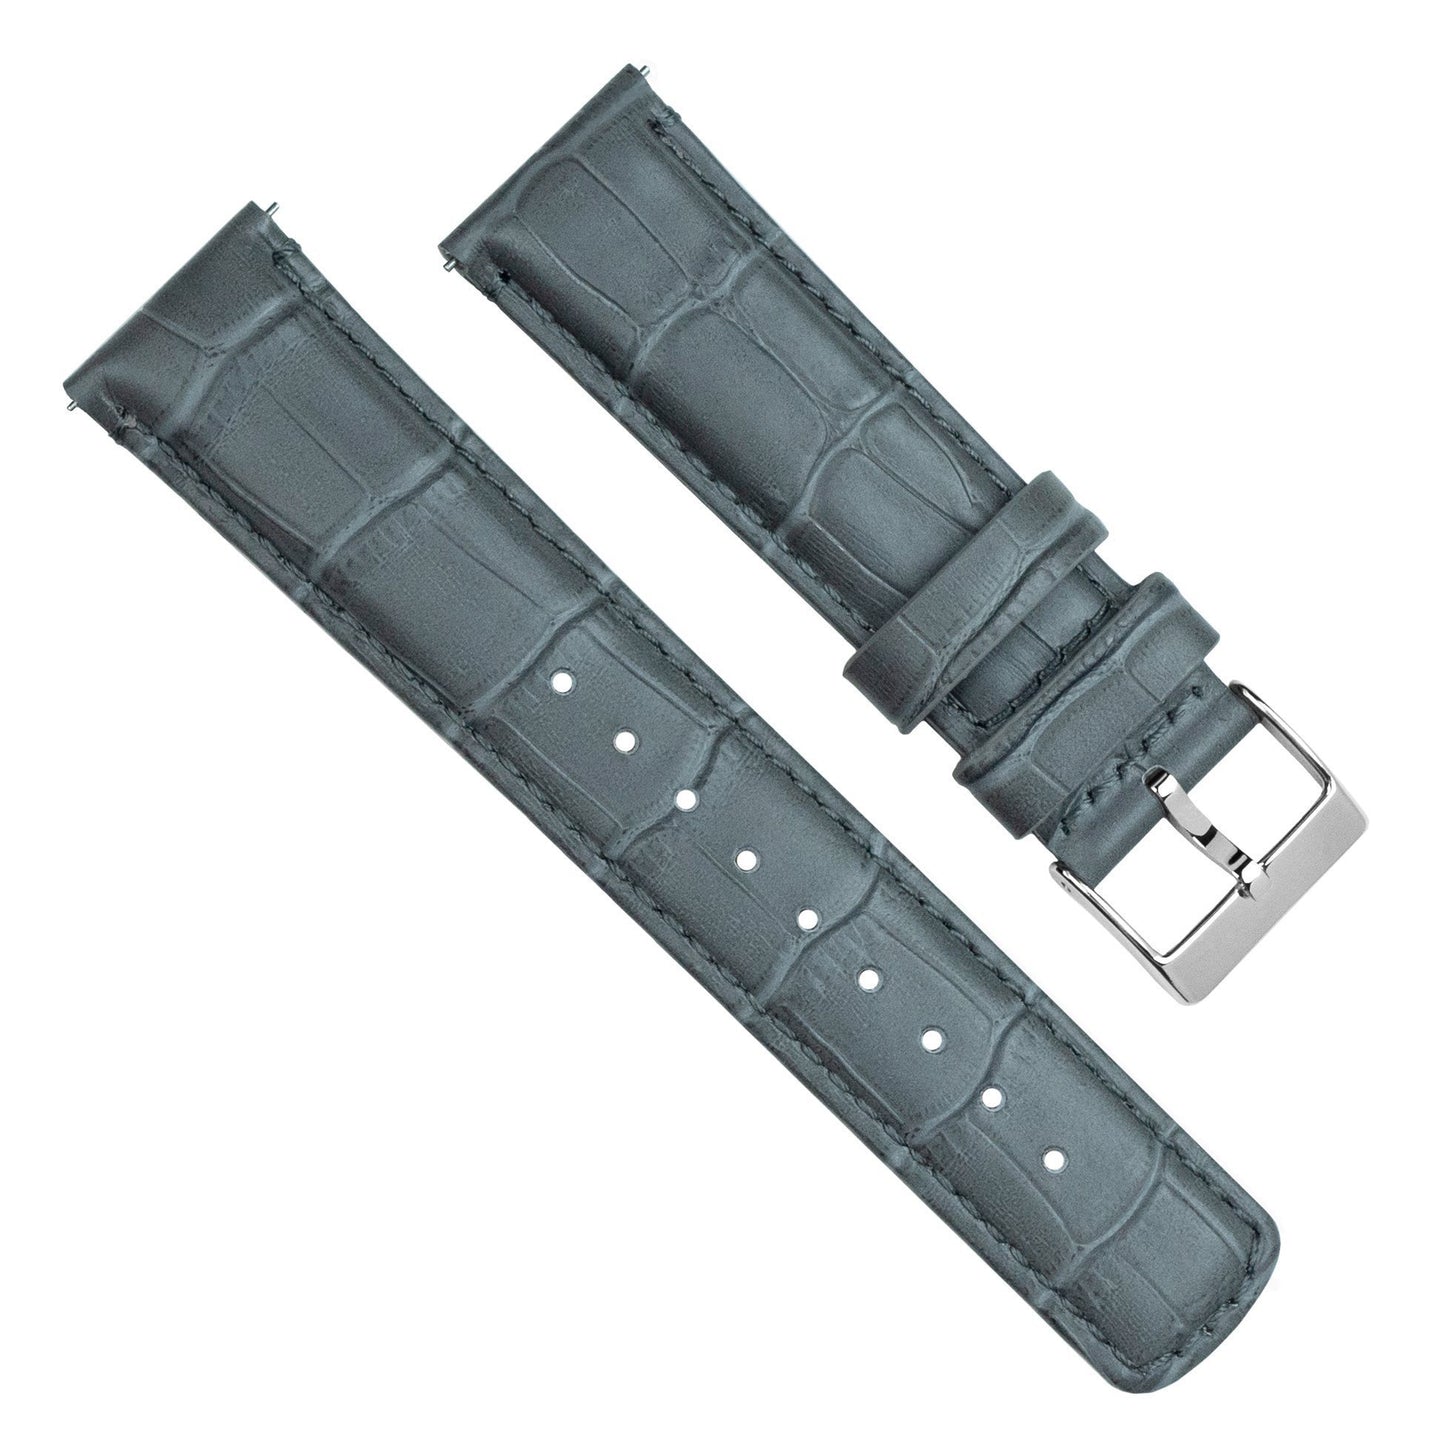 Pebble Smart Watches | Smoke Grey Alligator Grain Leather - Barton Watch Bands